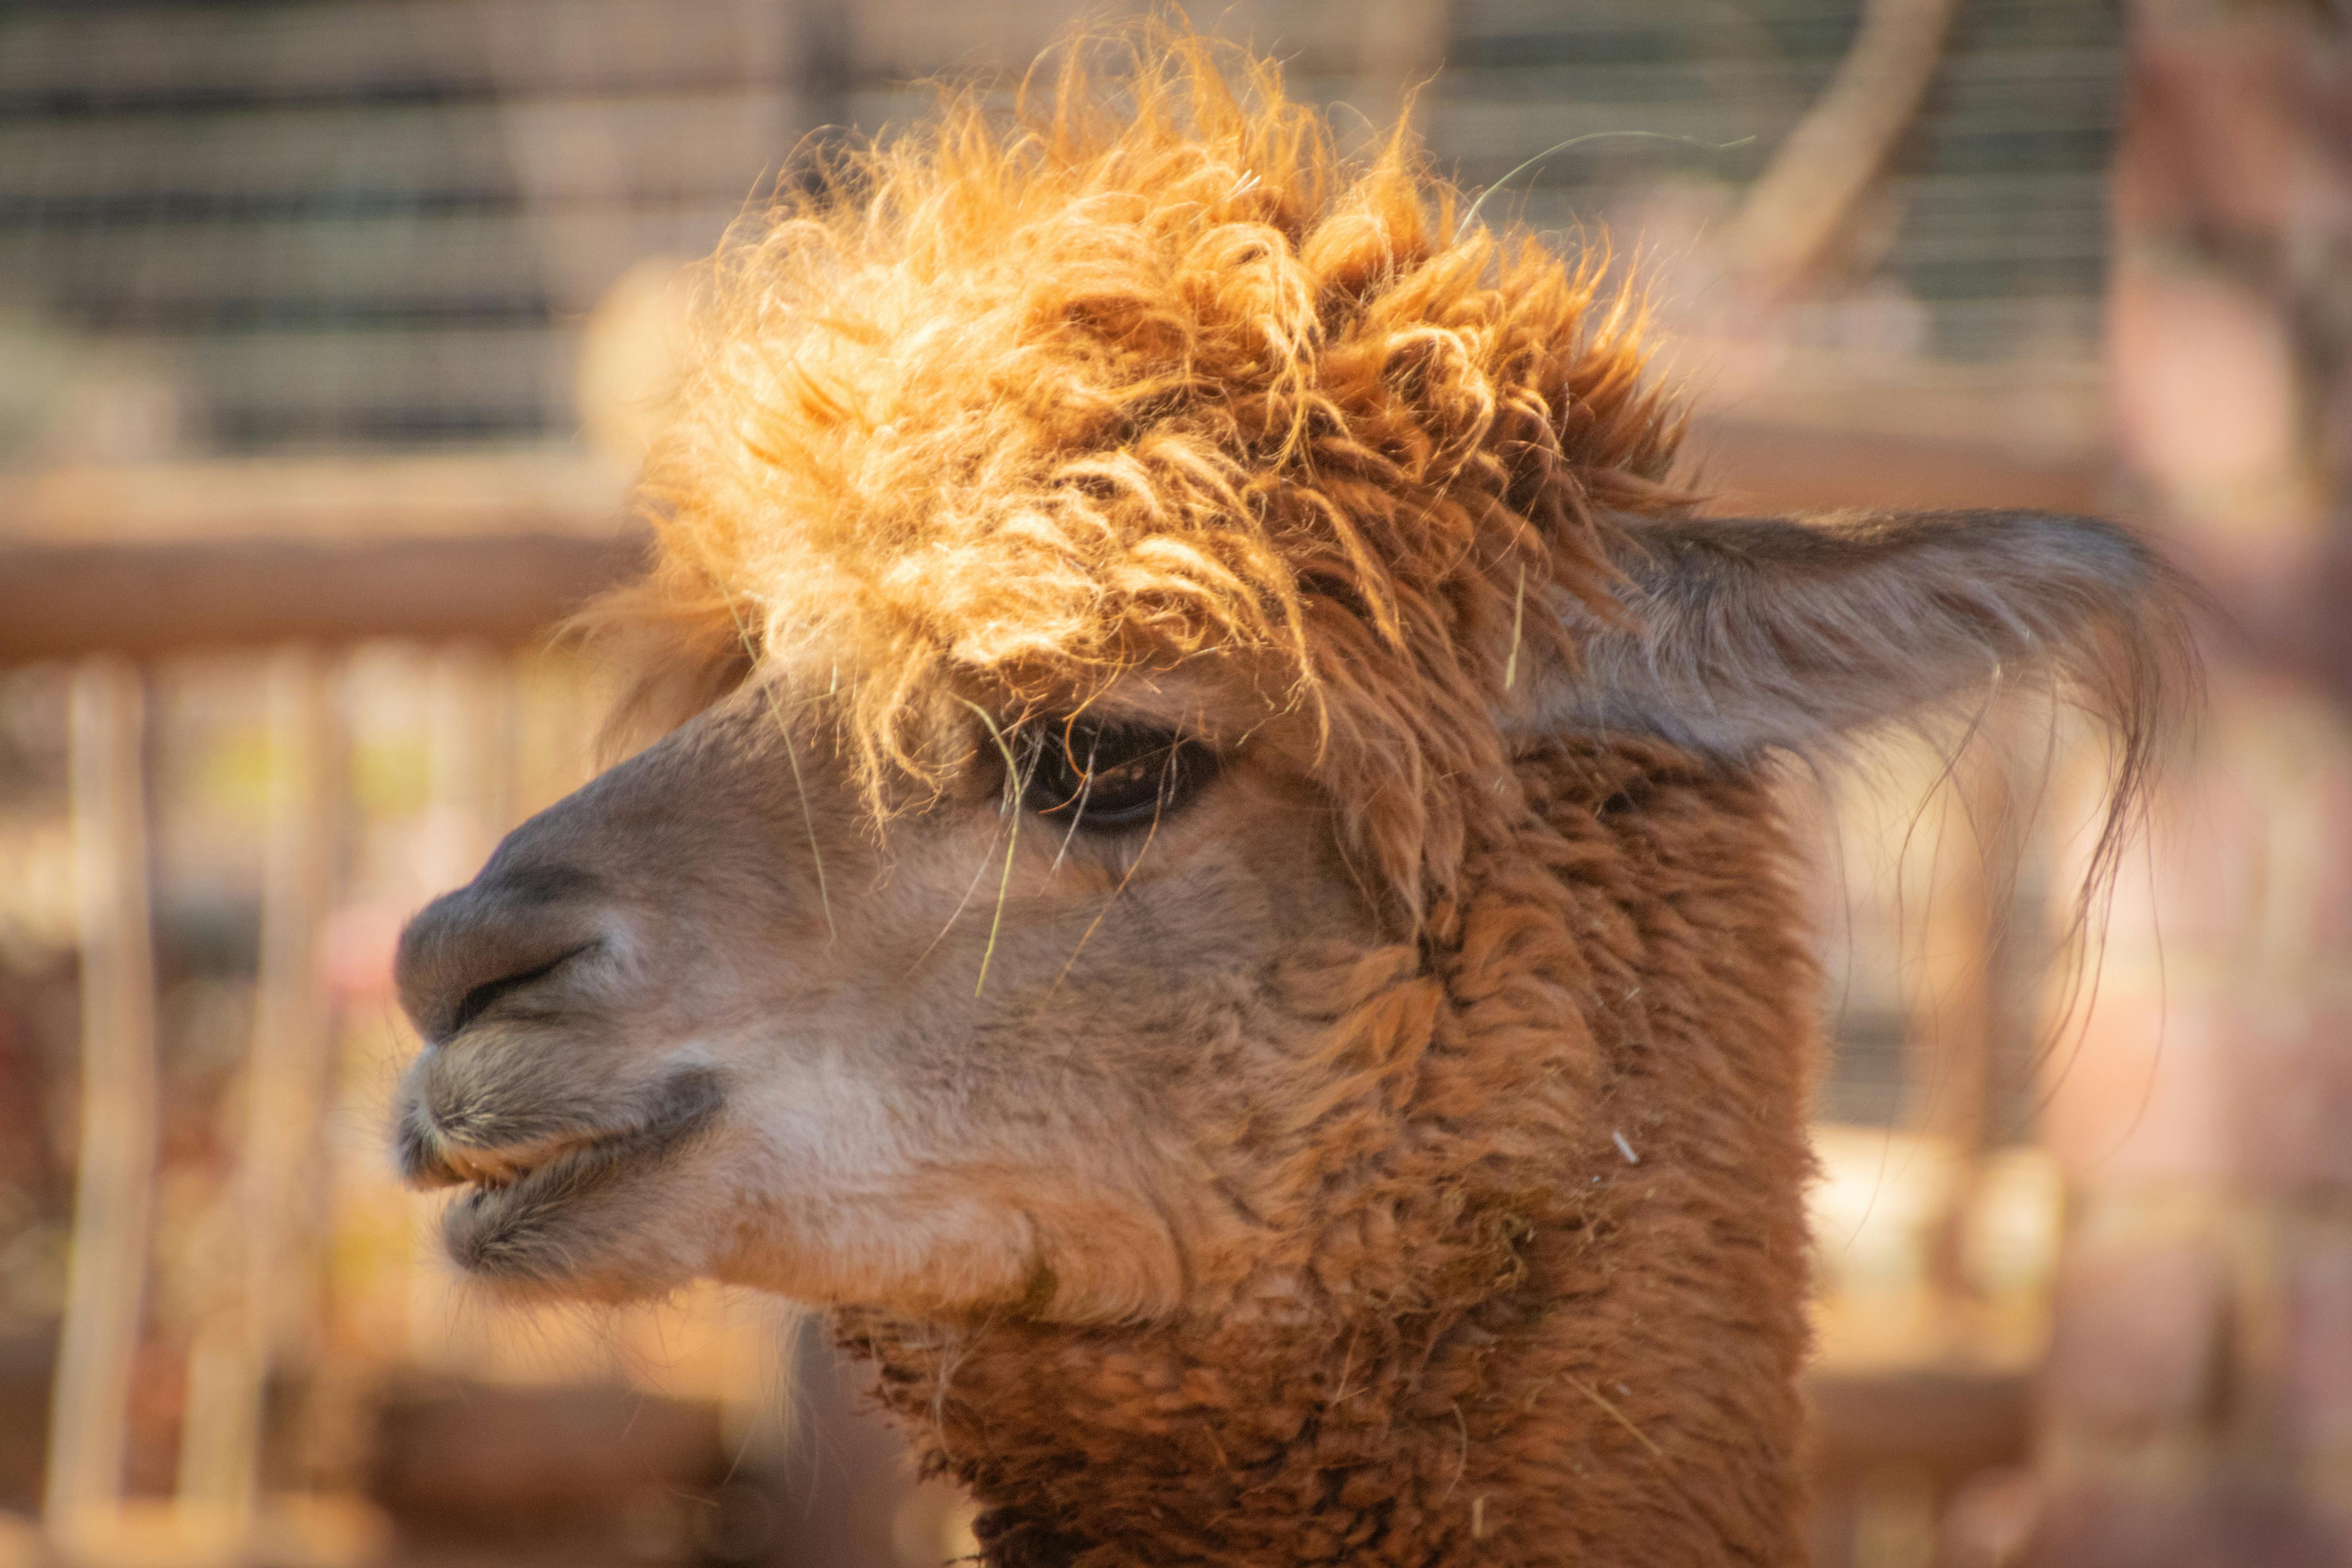 Alpaca Photos, Download The BEST Free Alpaca Stock Photos & HD Images